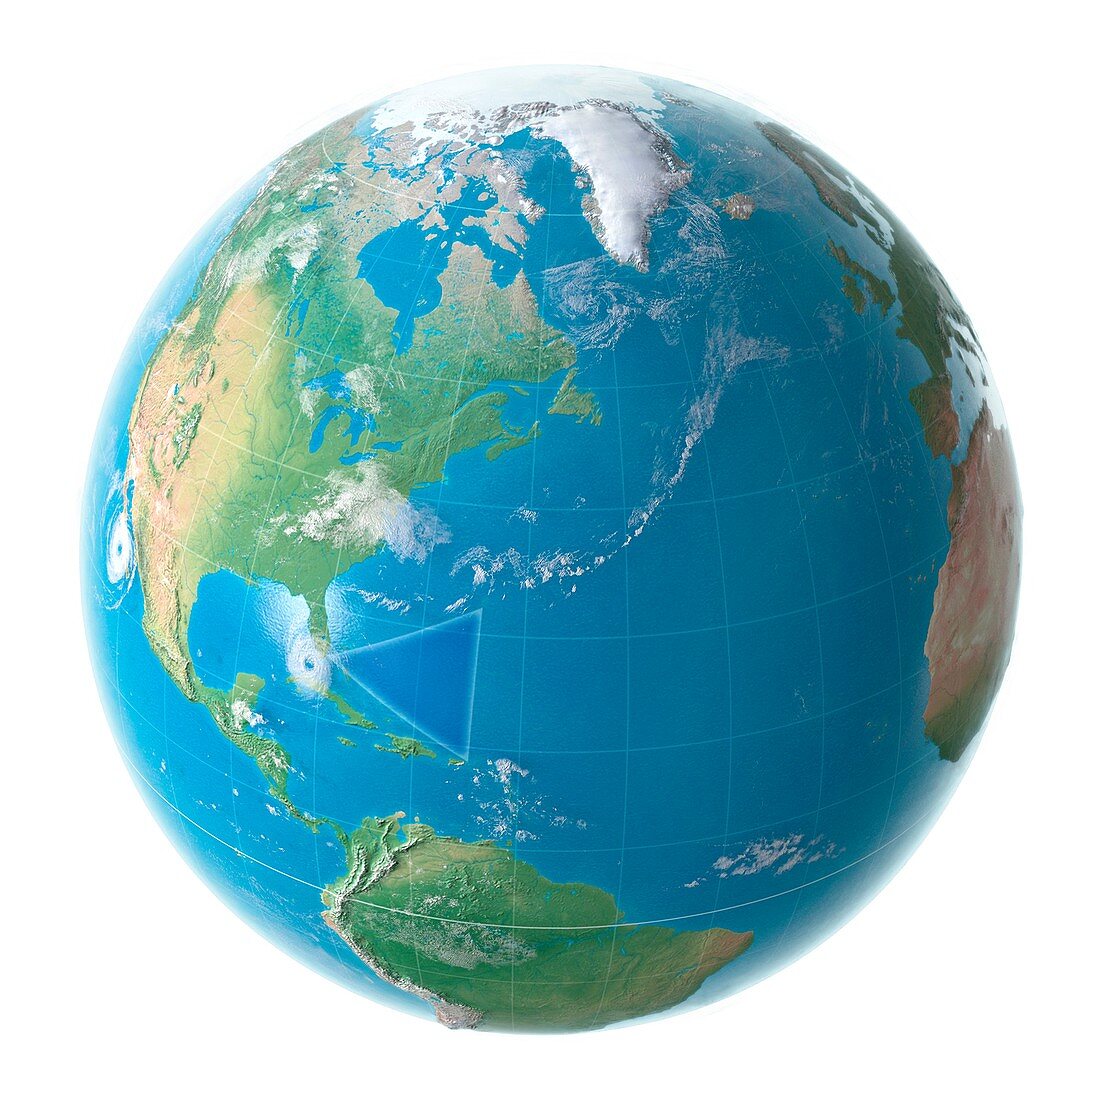 Bermuda Triangle on Earth globe, illustration